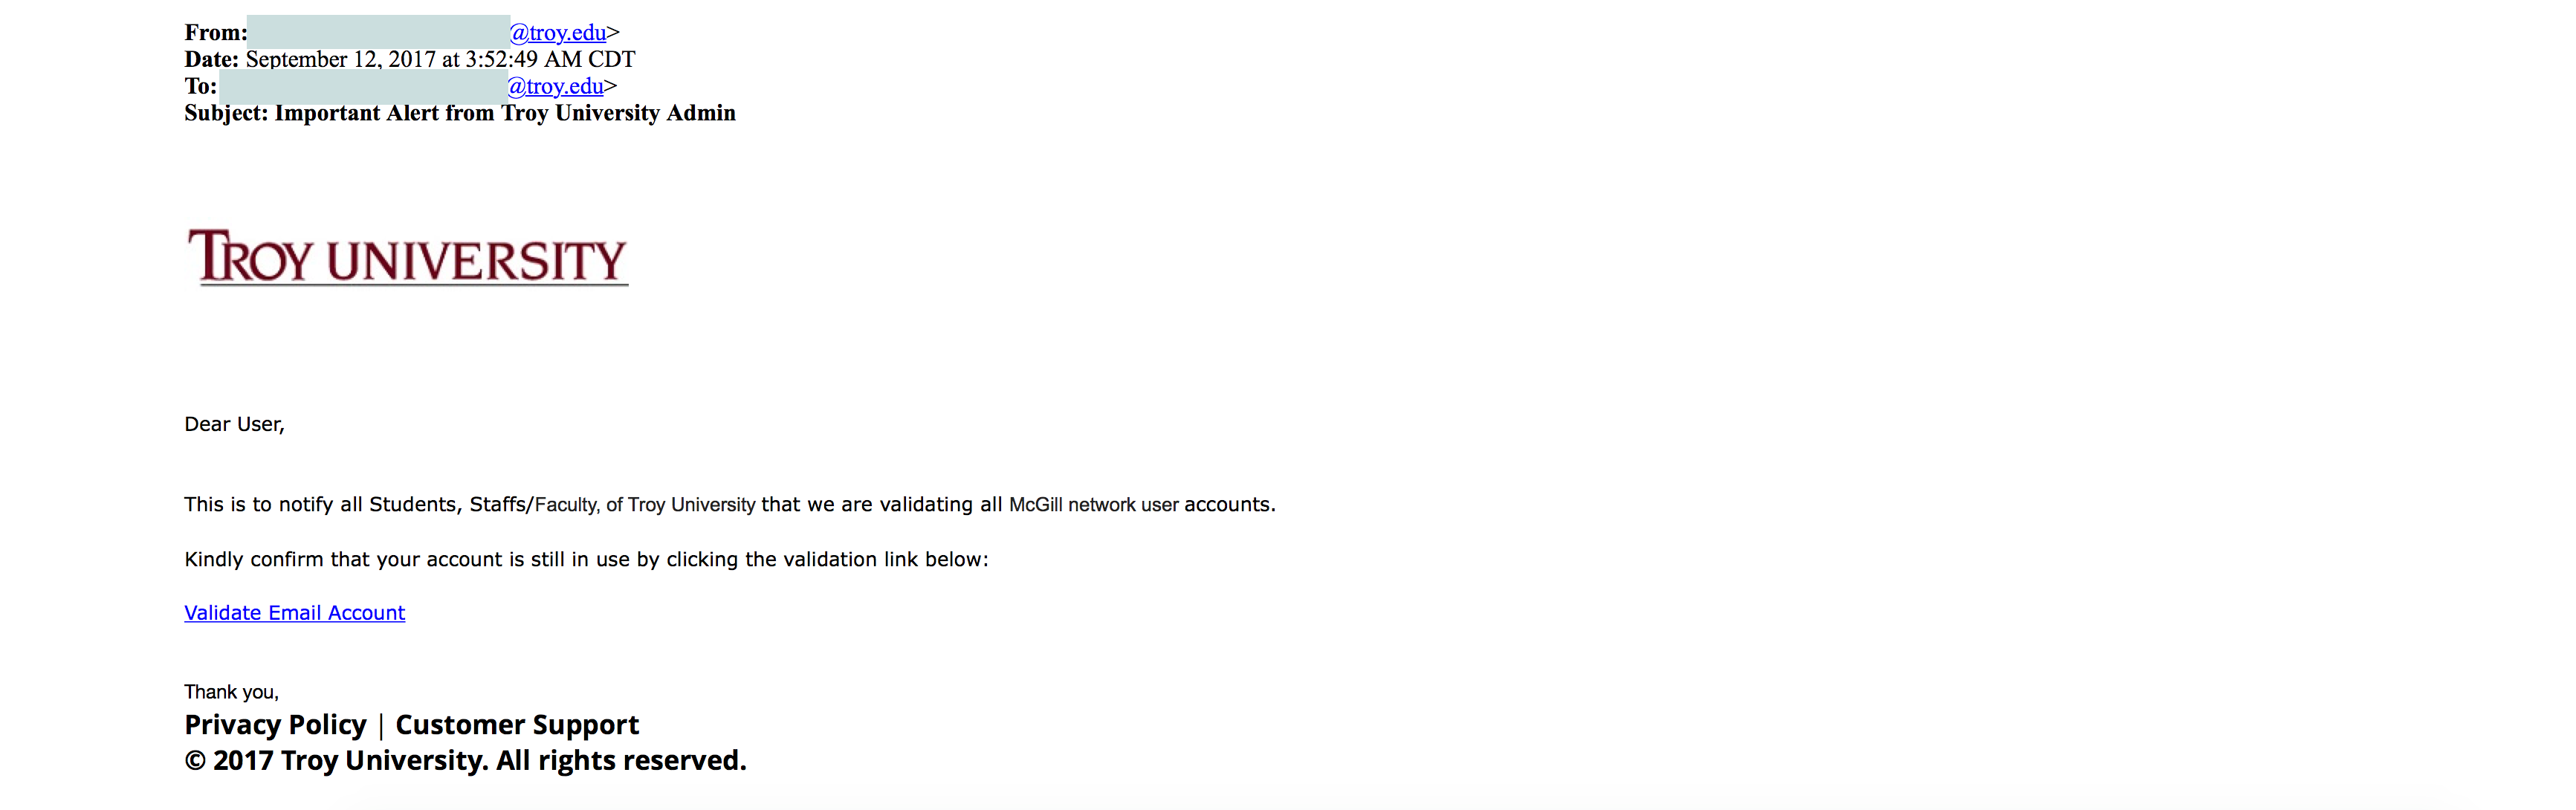 Screenshot 2 of phishing message received in September 2017